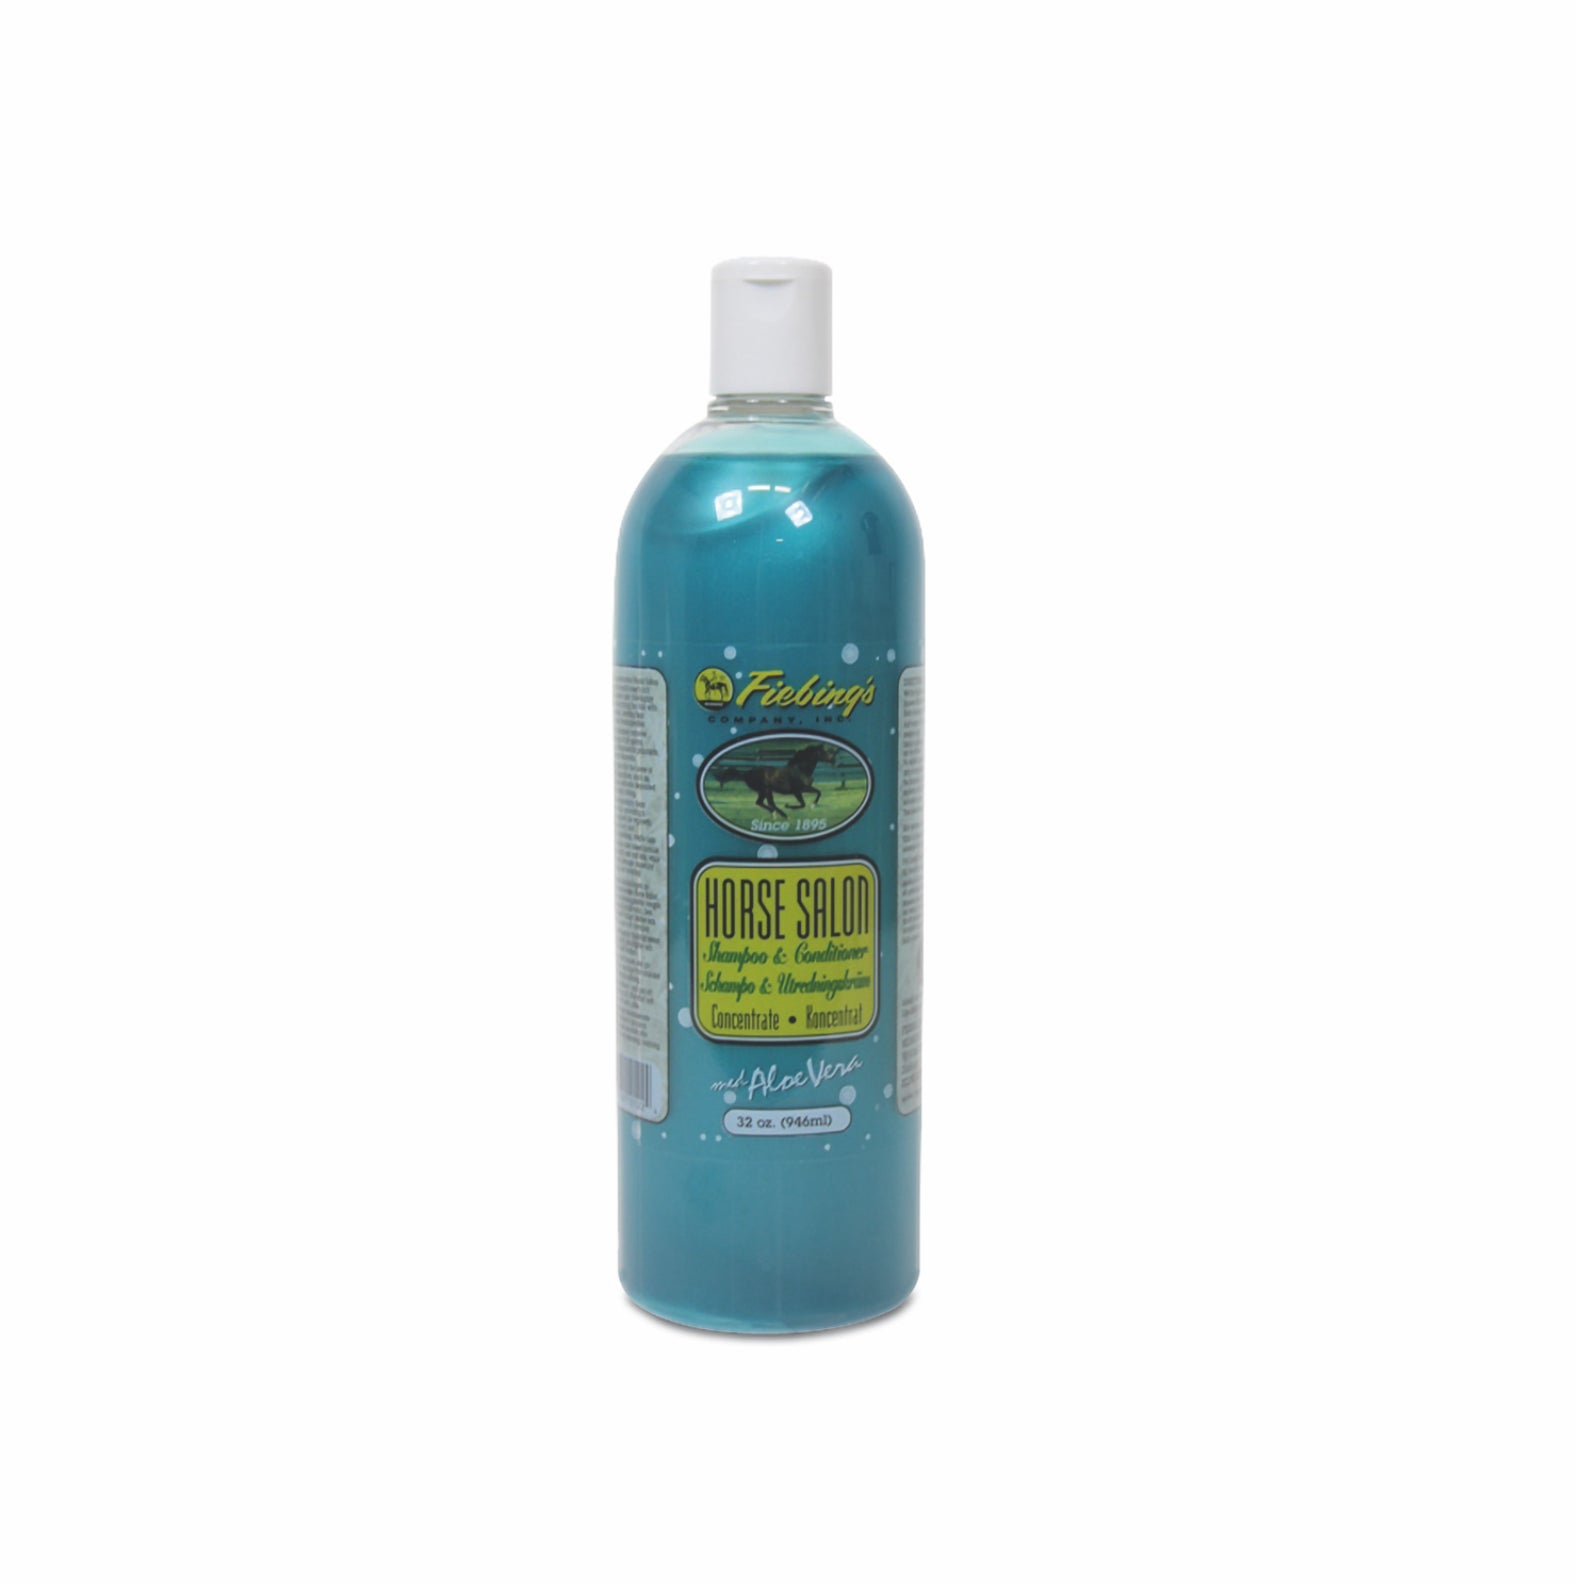 Shampoo “Horse Salon” 946ml | Fiebing’s | El gaucho store